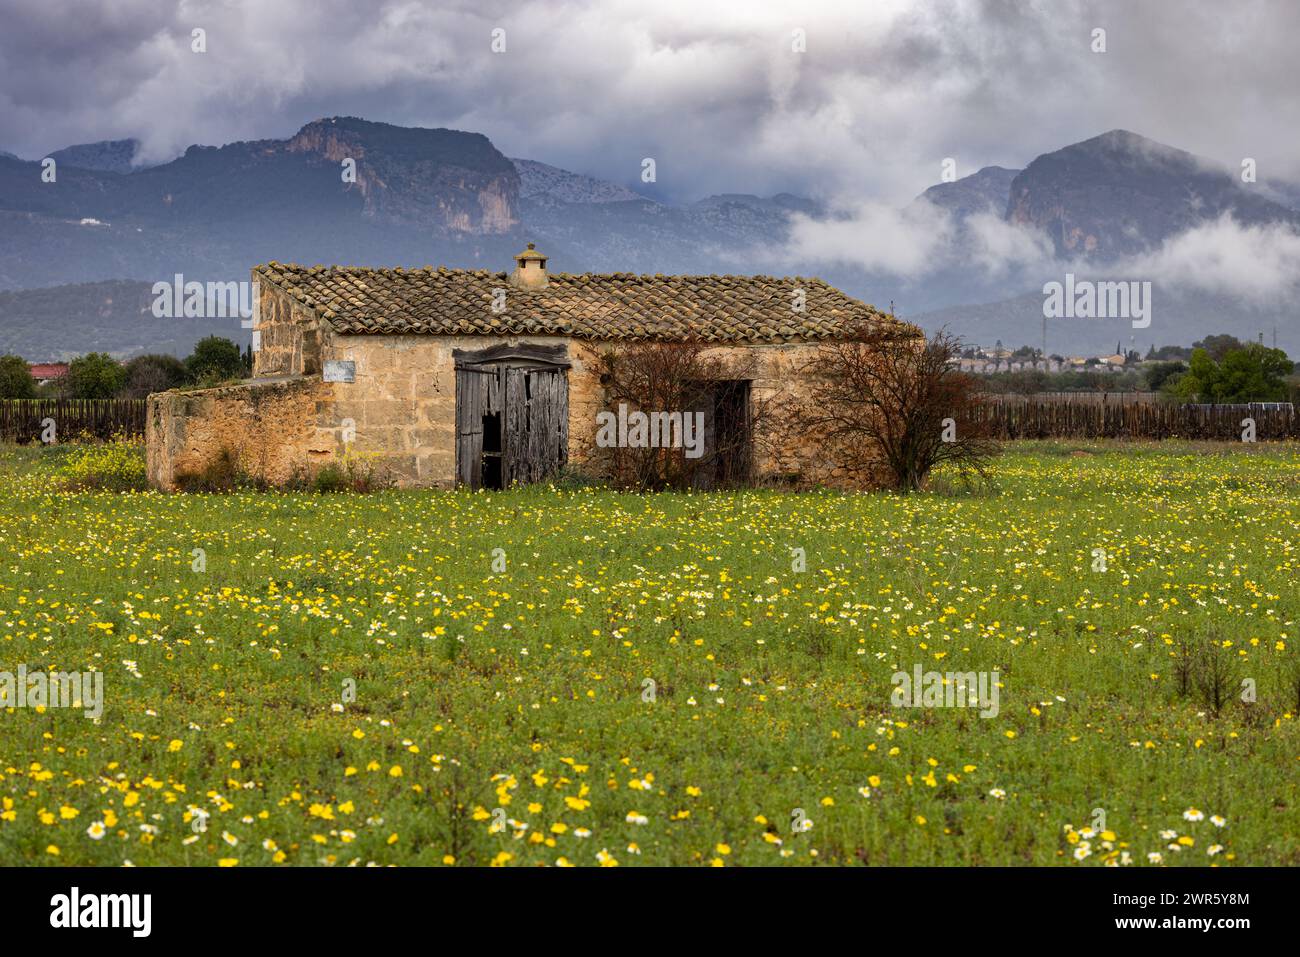 Old traditional stony barn on a flowering pasture in front of the Serra de Tramuntana mountain range in Majorca, Mallorca, Balearic Islands, Spain, Eu Stock Photo